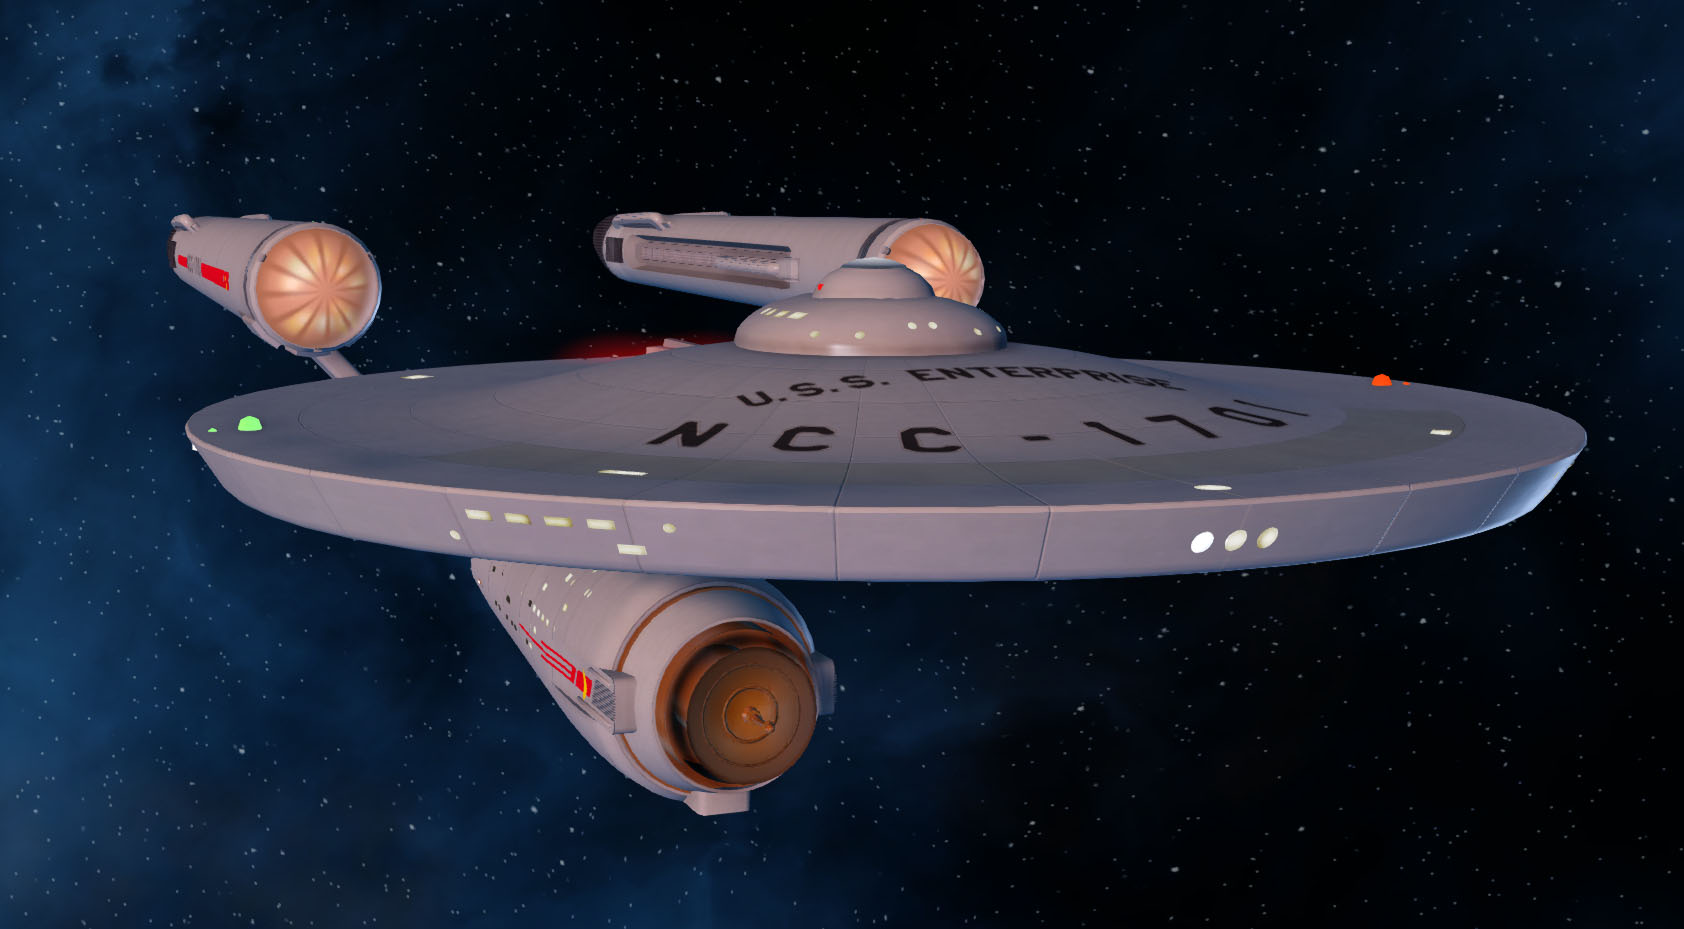 STPAL-024-B Star Trek Classic Enterprise NCC-1701 Oval Patch 4"-Yellow Letters 